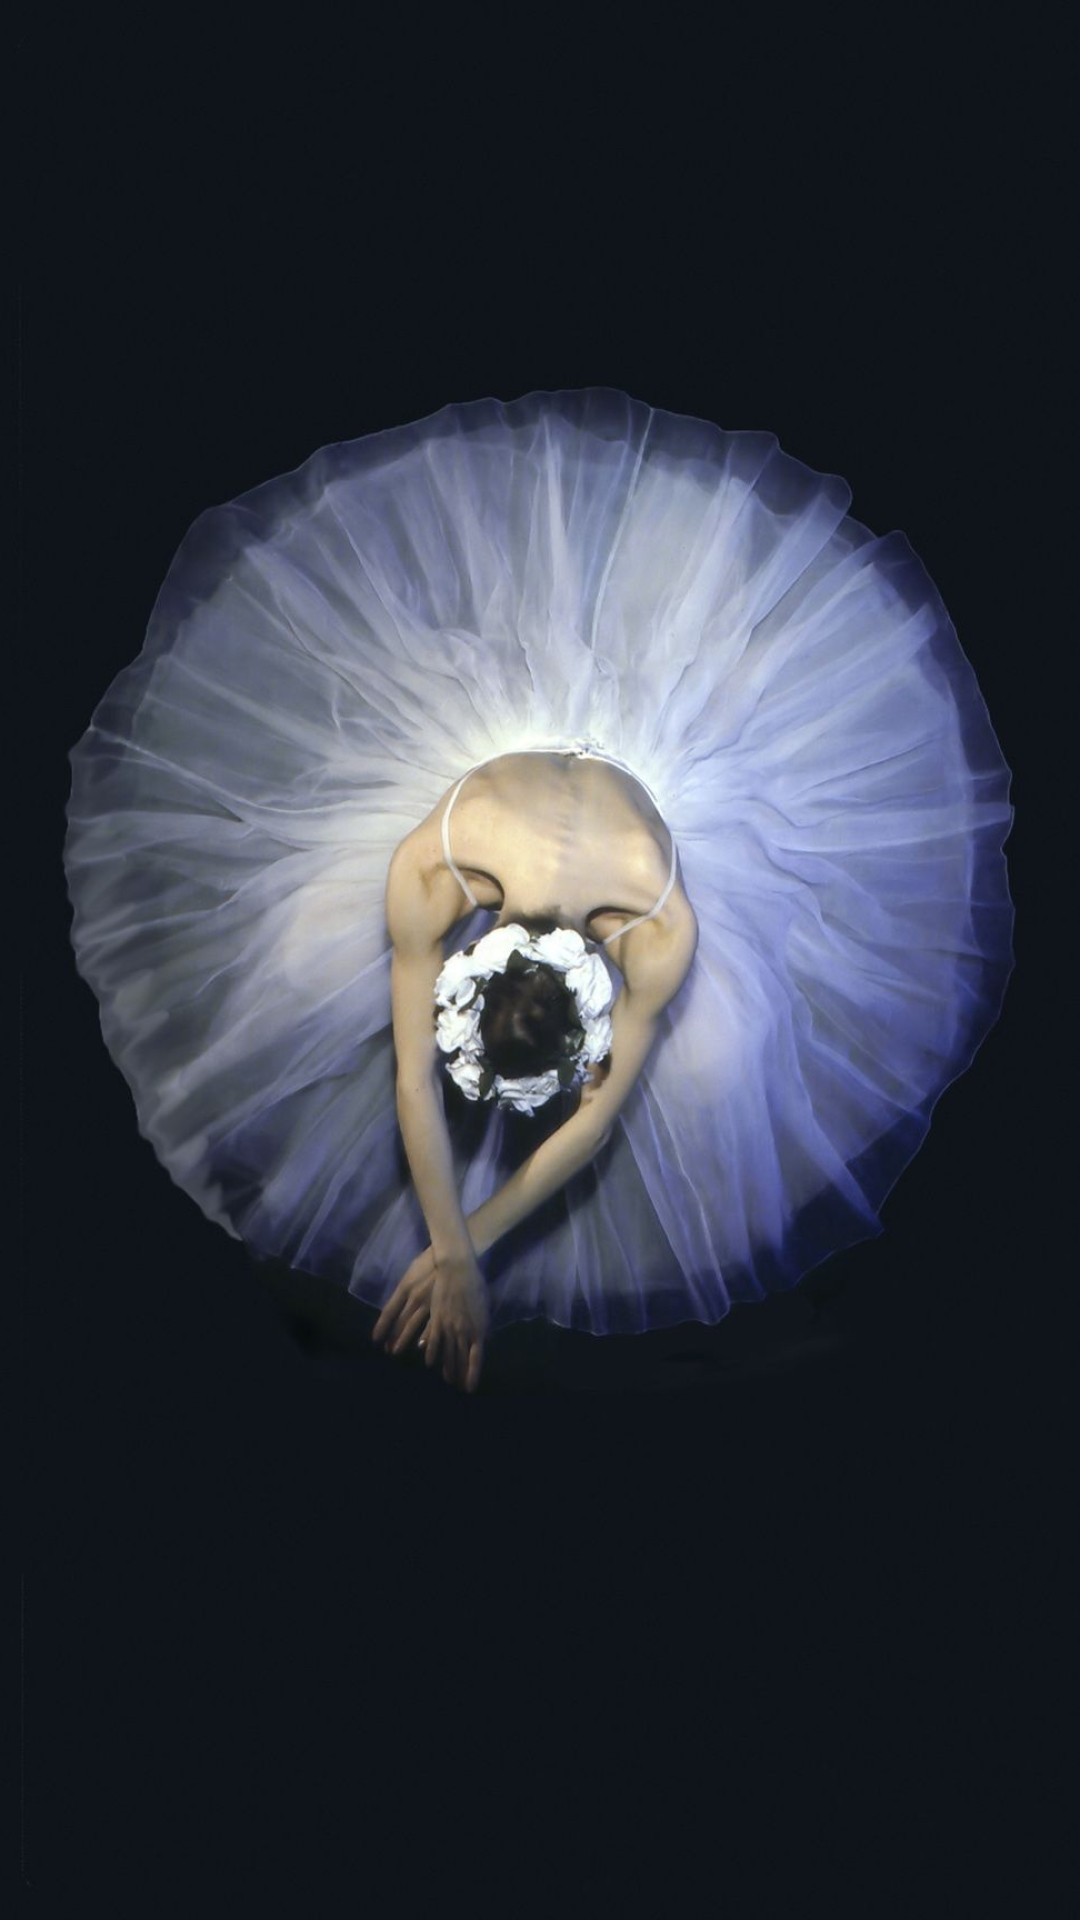 Ballet beauty, Artful wallpapers, Dance-inspired art, Graceful poses, 1080x1920 Full HD Handy